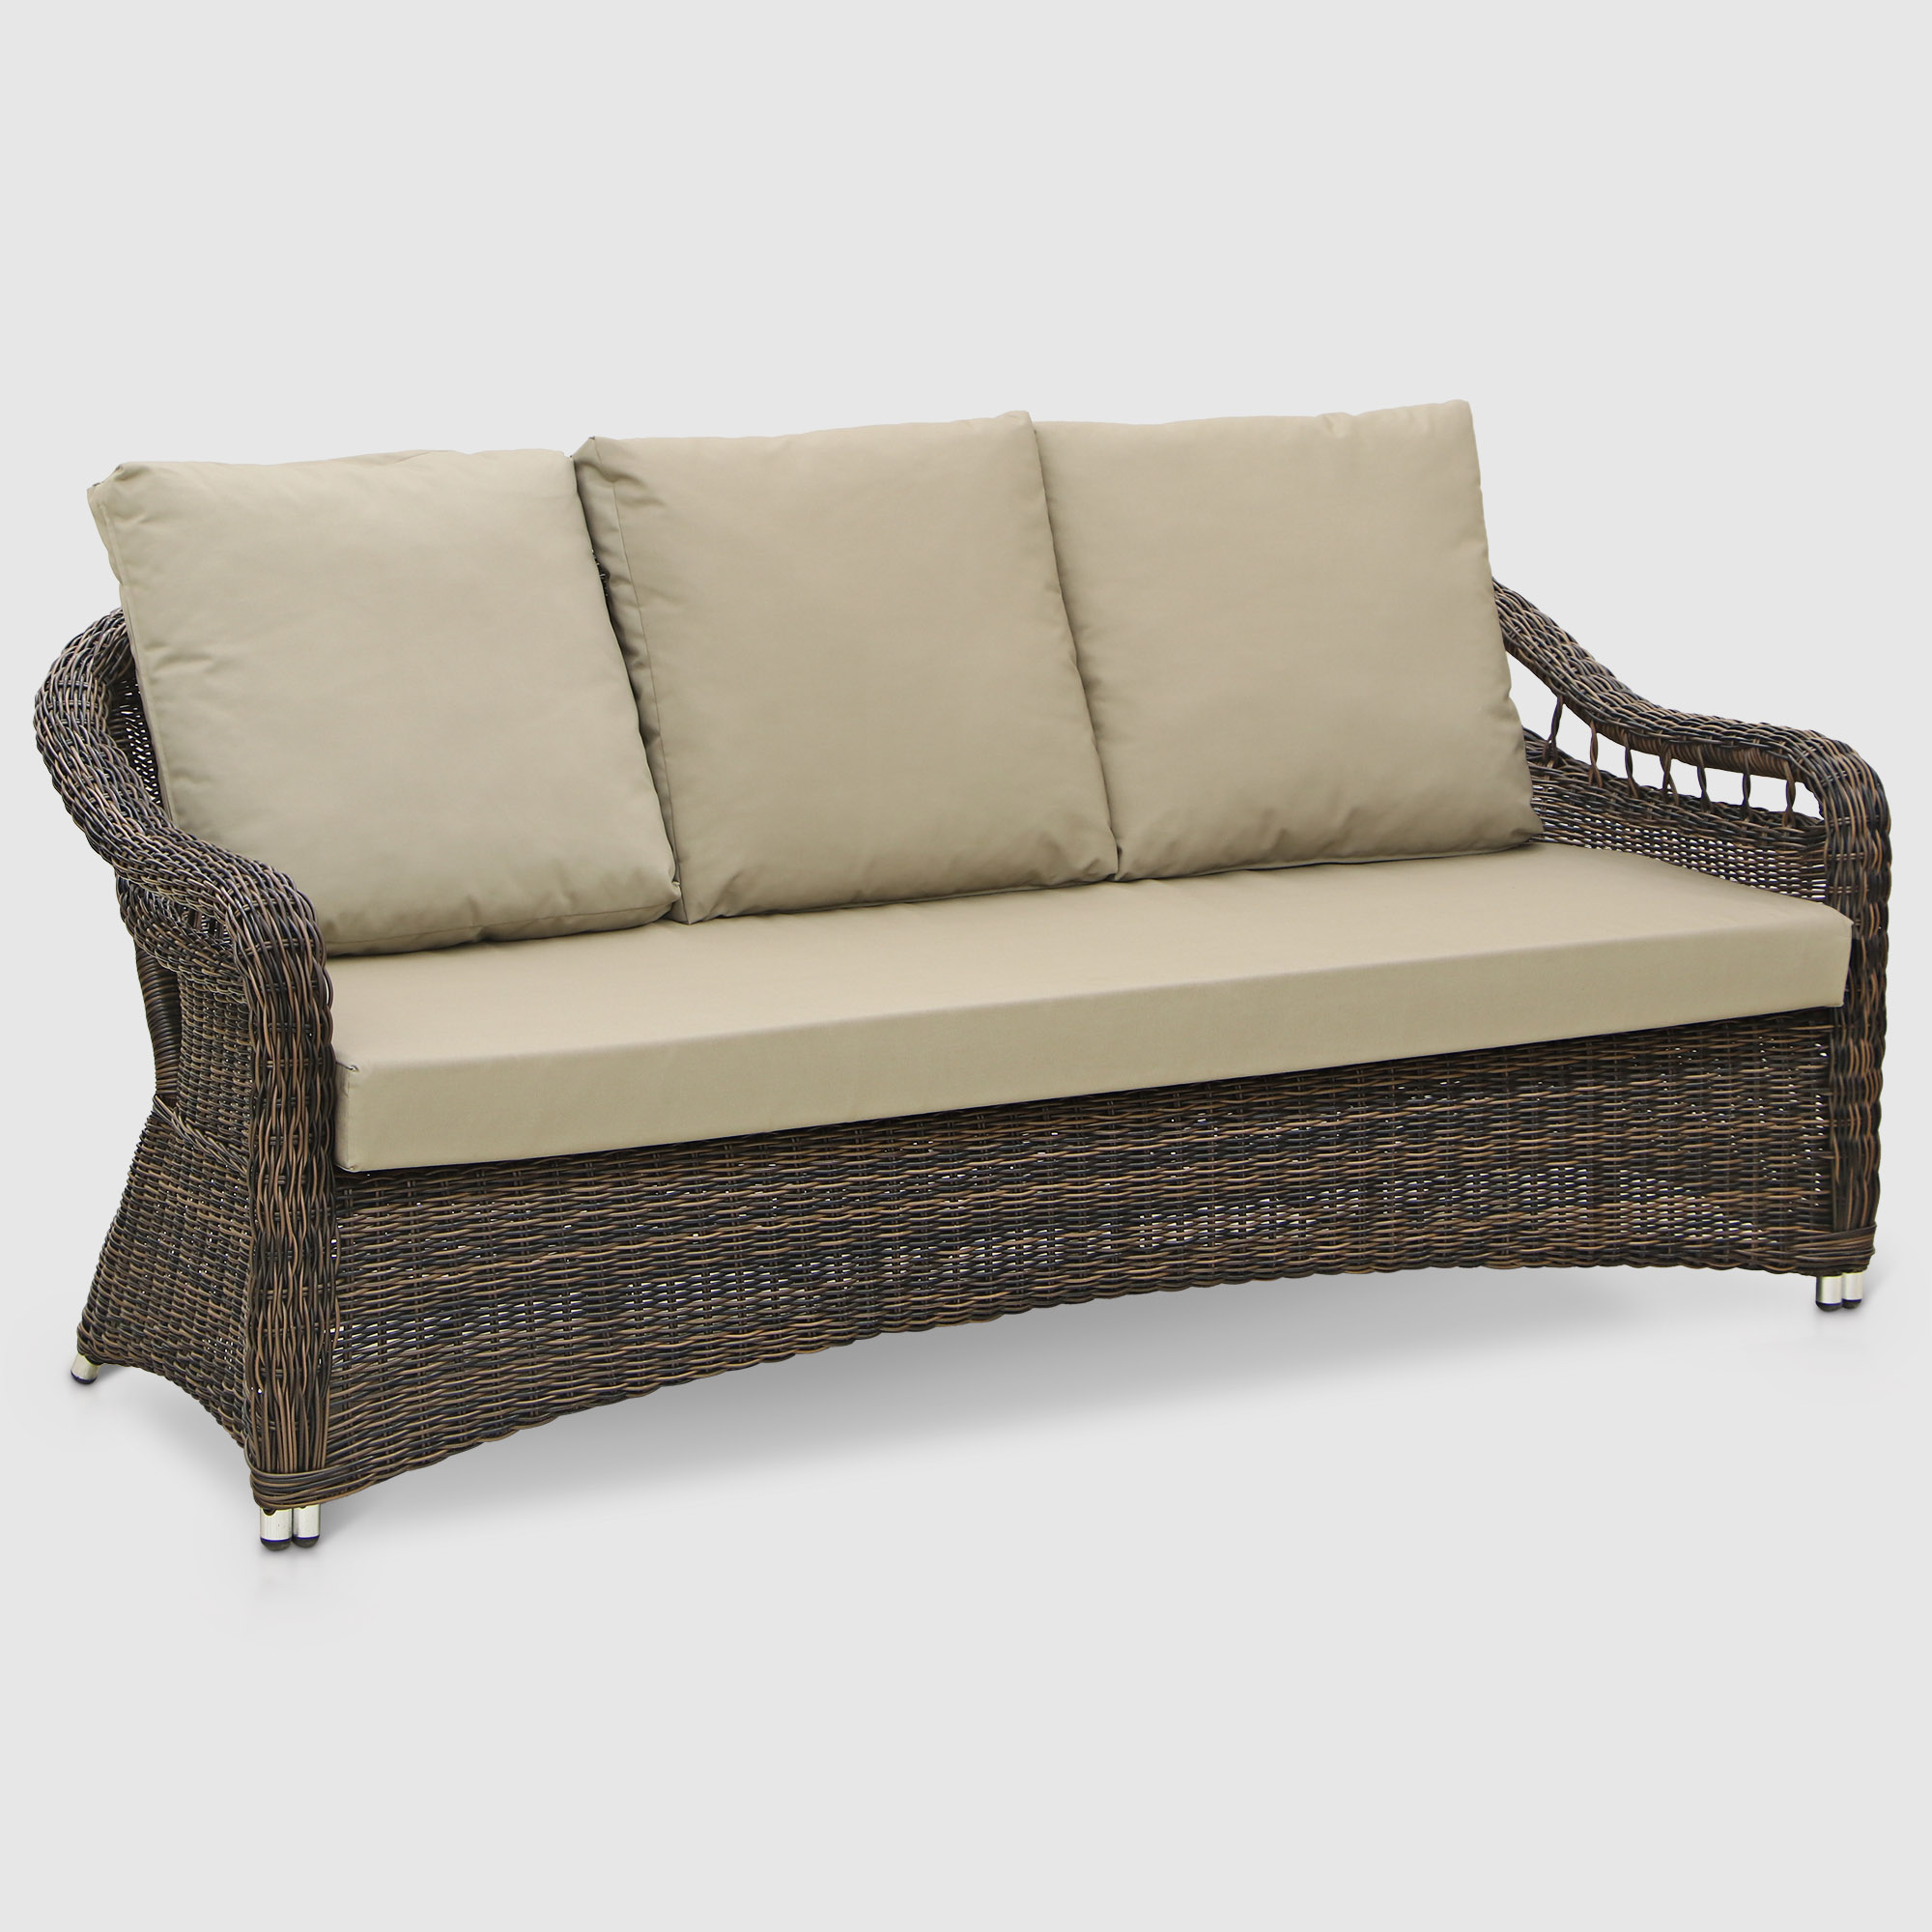 Комплект мебели NS Rattan Sky коричневый с бежевым 4 предмета, цвет бежевый, размер 180х78х78 - фото 3